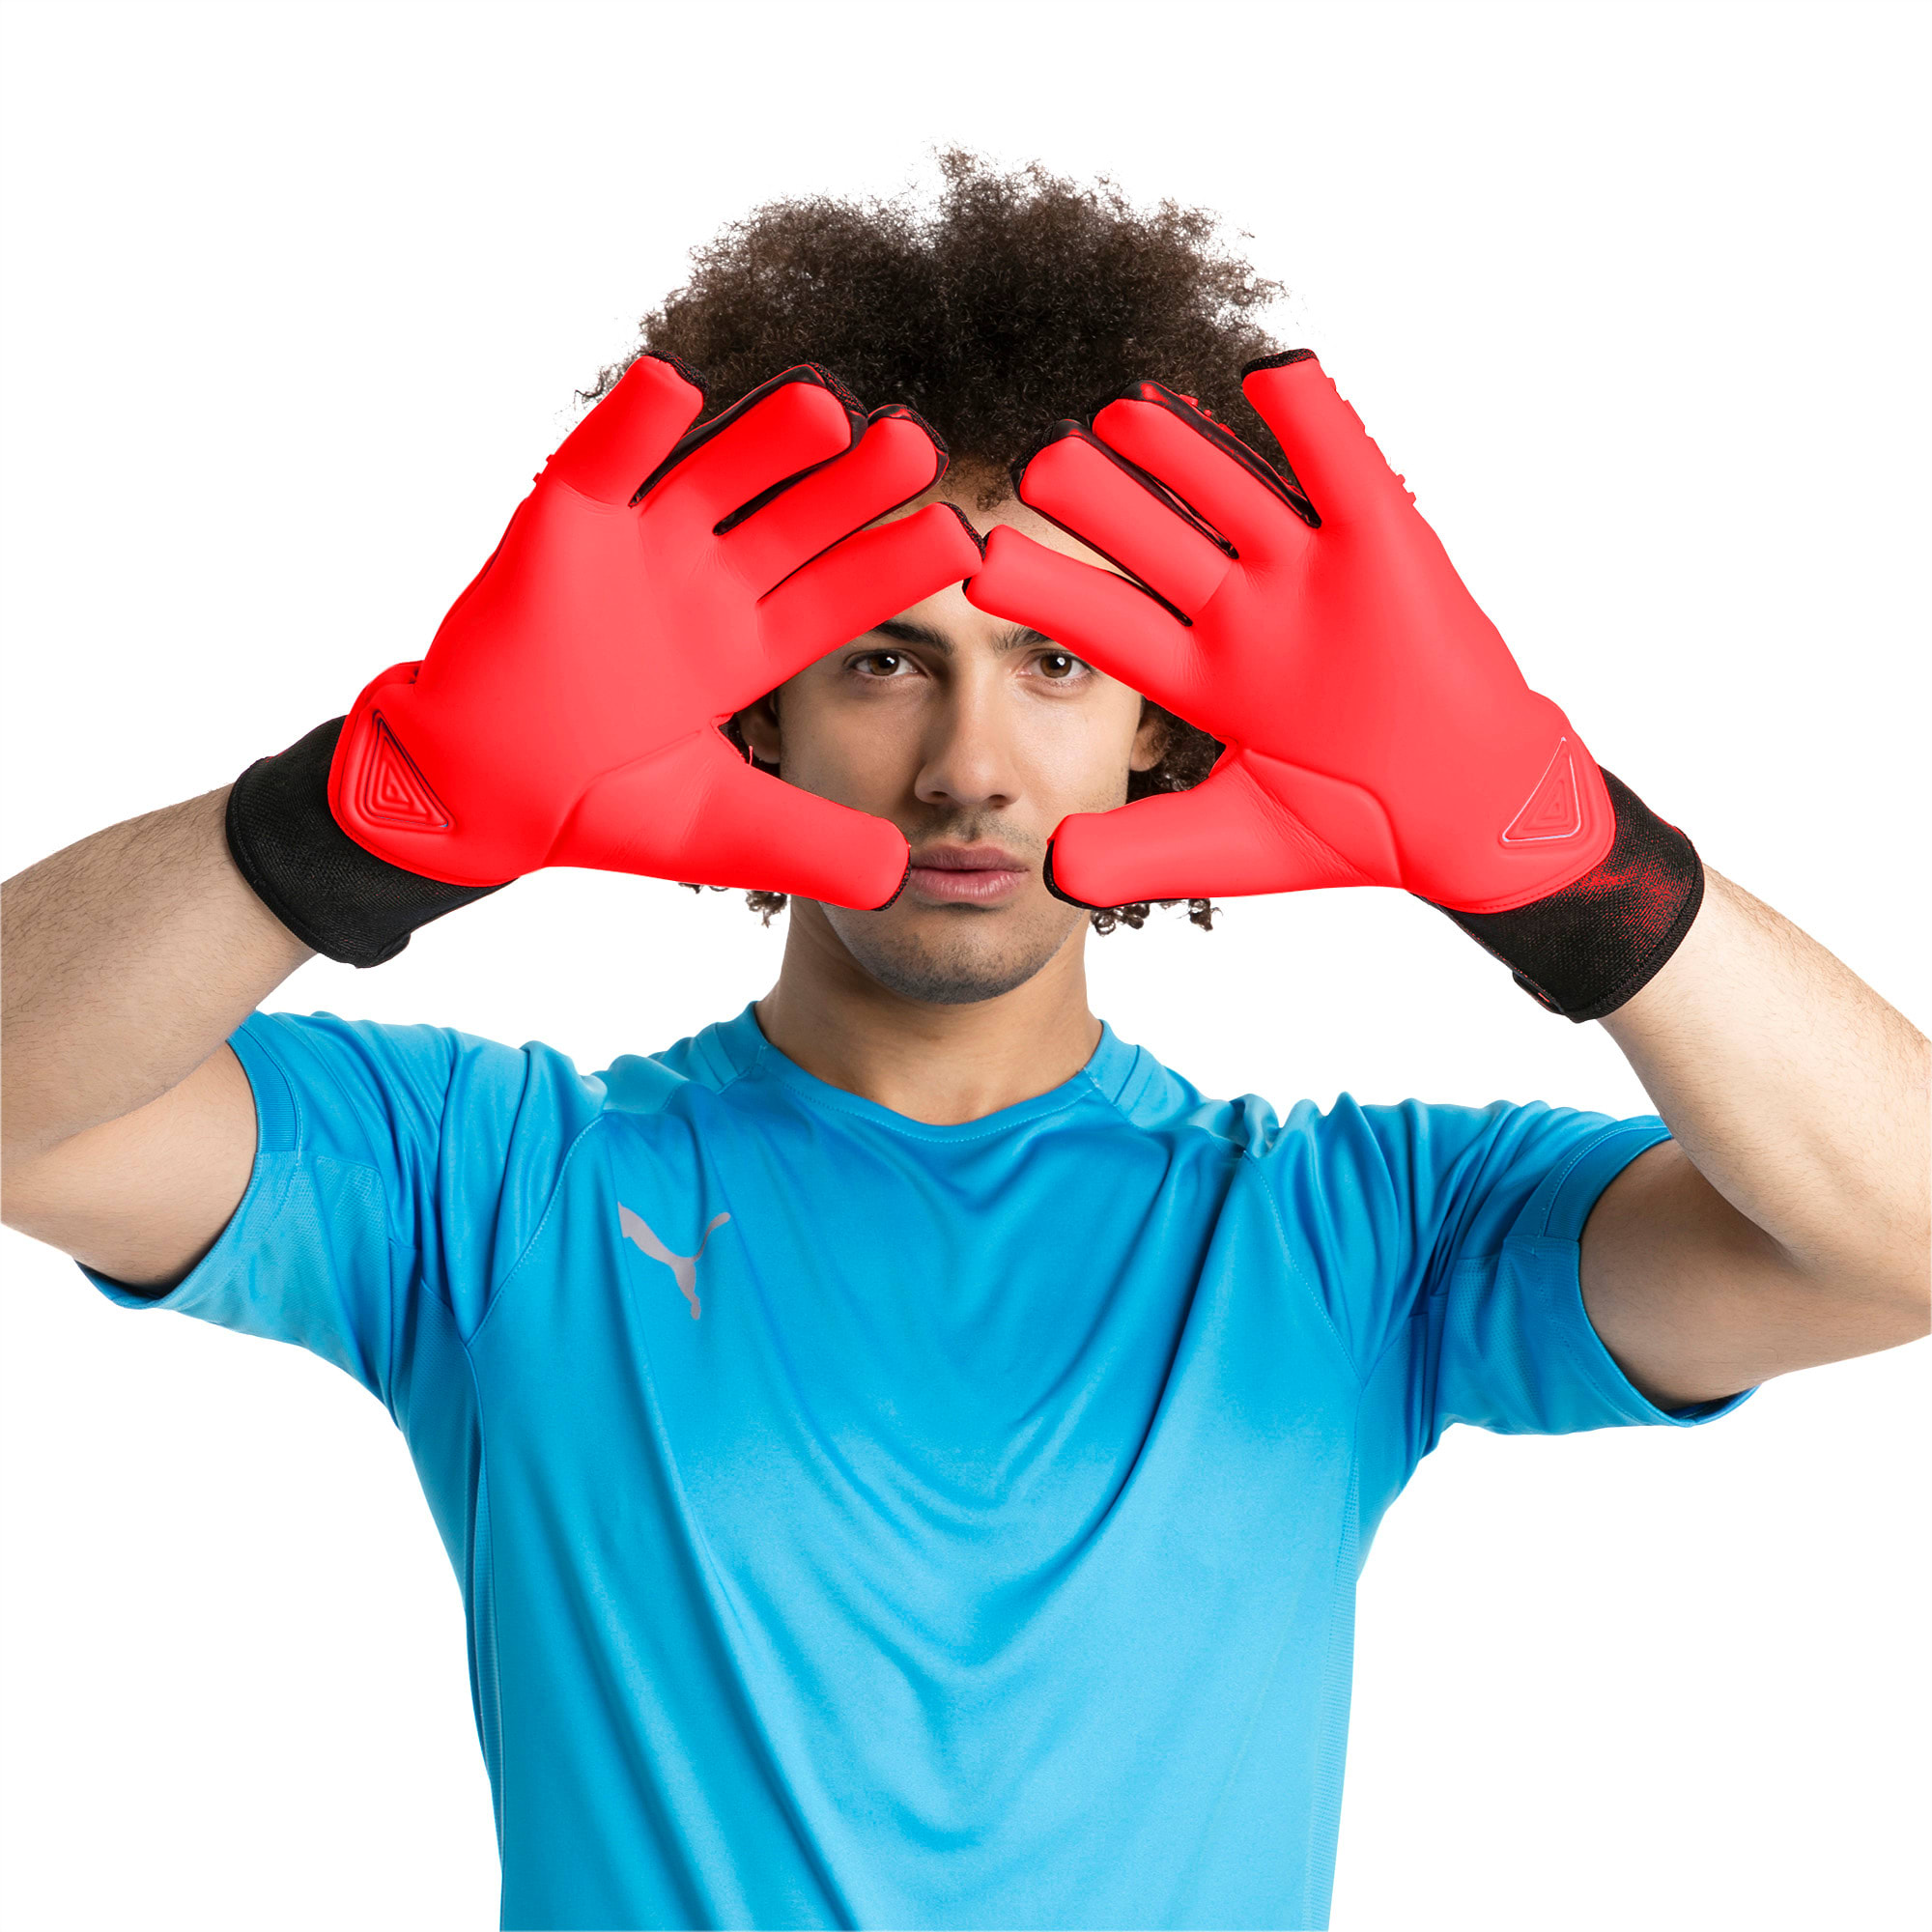 puma football gloves